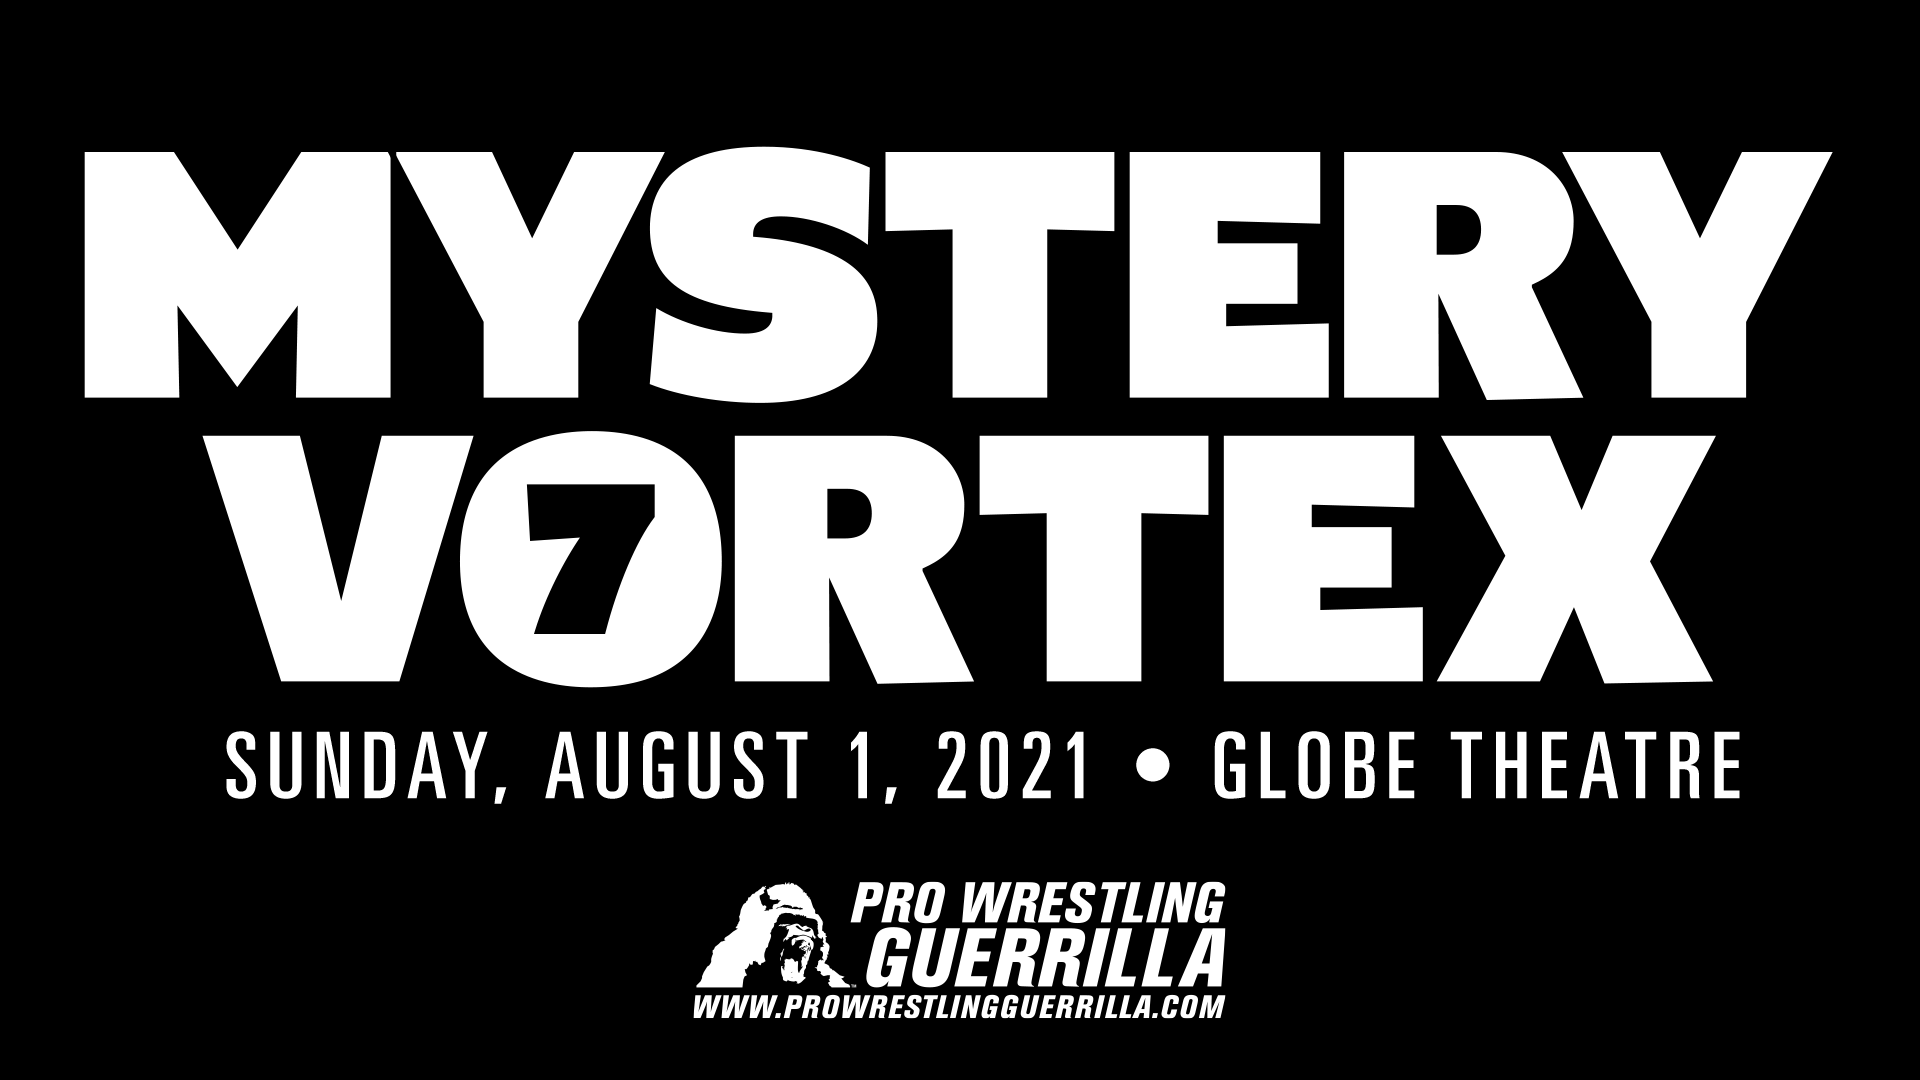 PWG Mystery Vortex 7 Results Aug. 1, 2021 AEW Wrestlers Appear TPWW